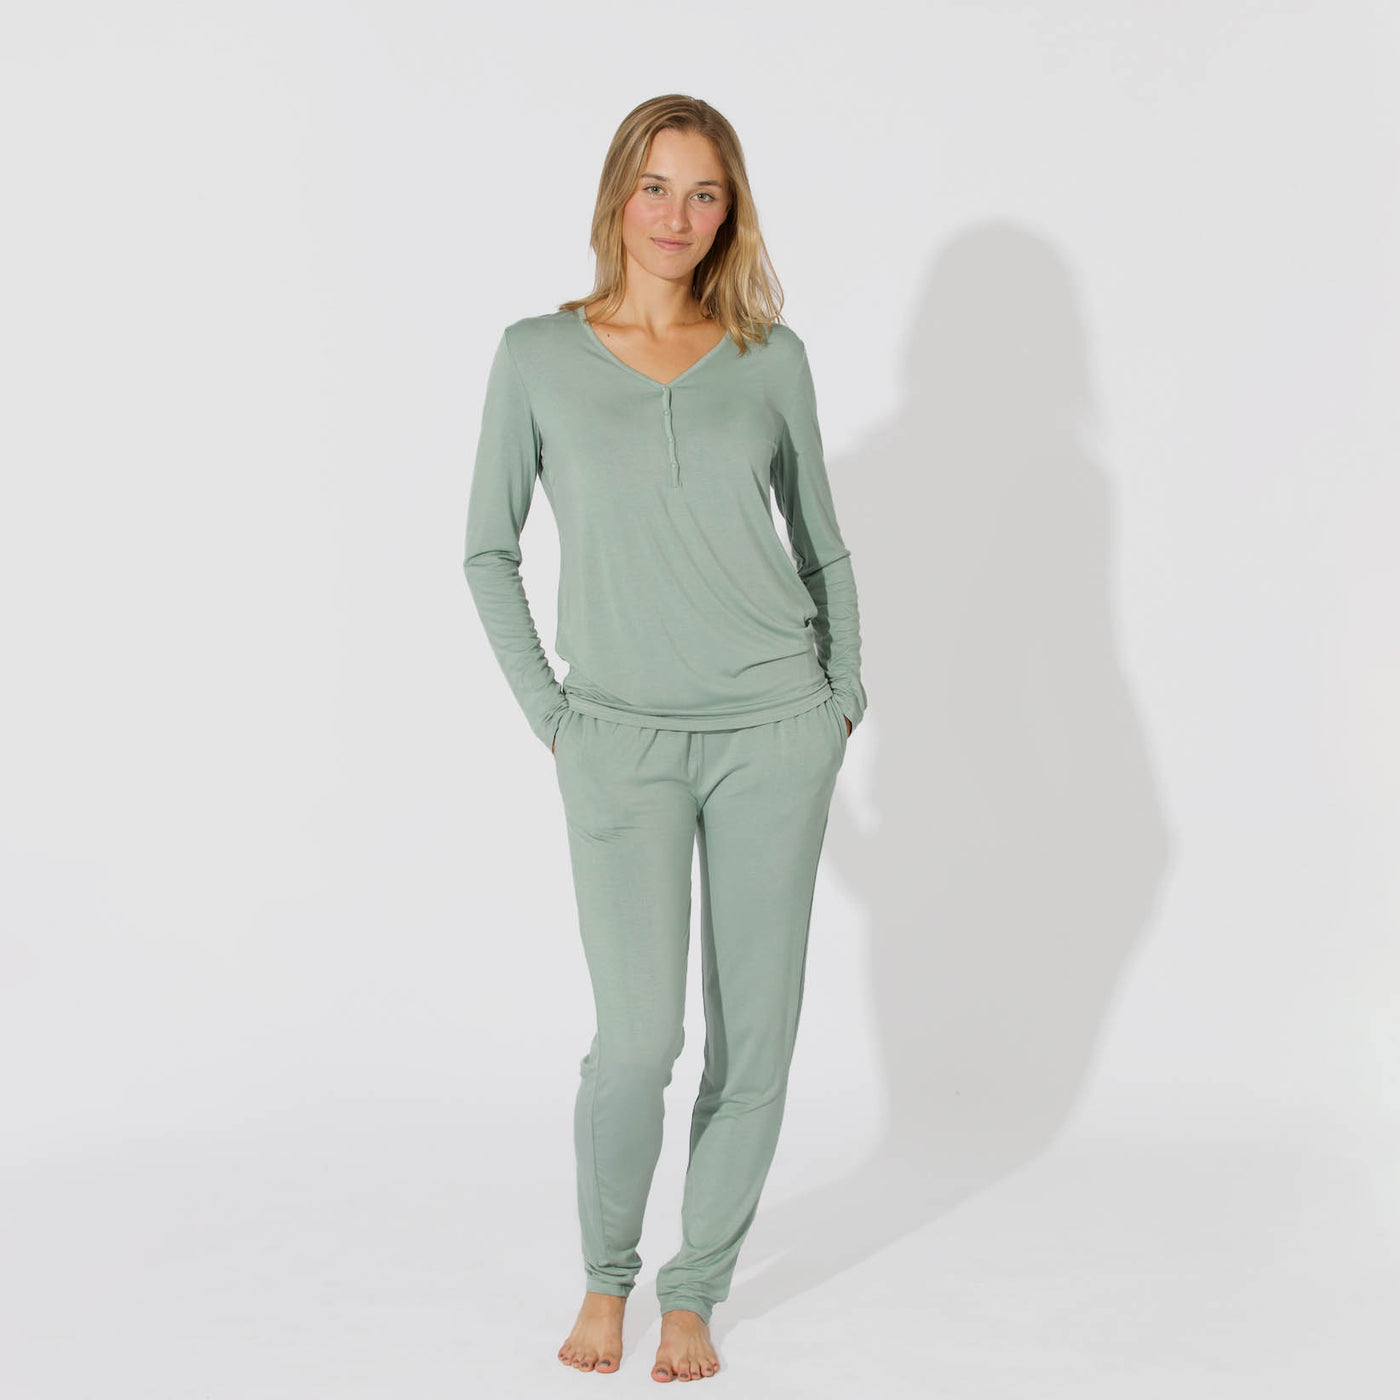 Misty Green Bamboo Women's Pajama Set